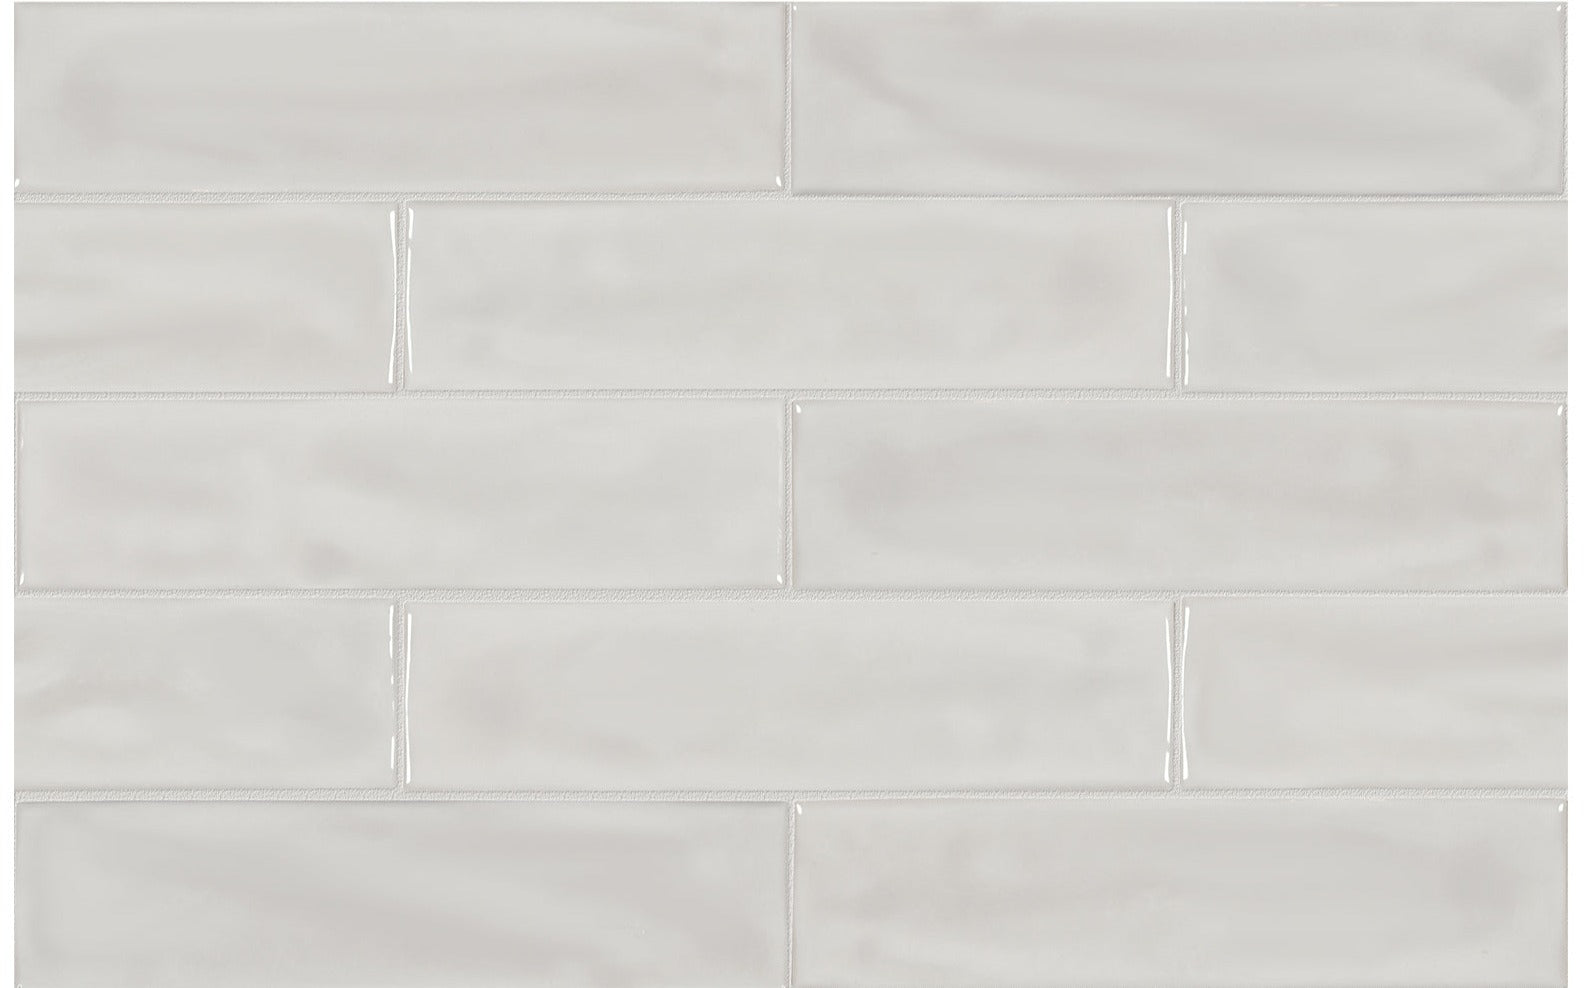 Marlow Mist Glossy Tile 3"x12" Wall Tile $4.99/sf 10.66 sf/box